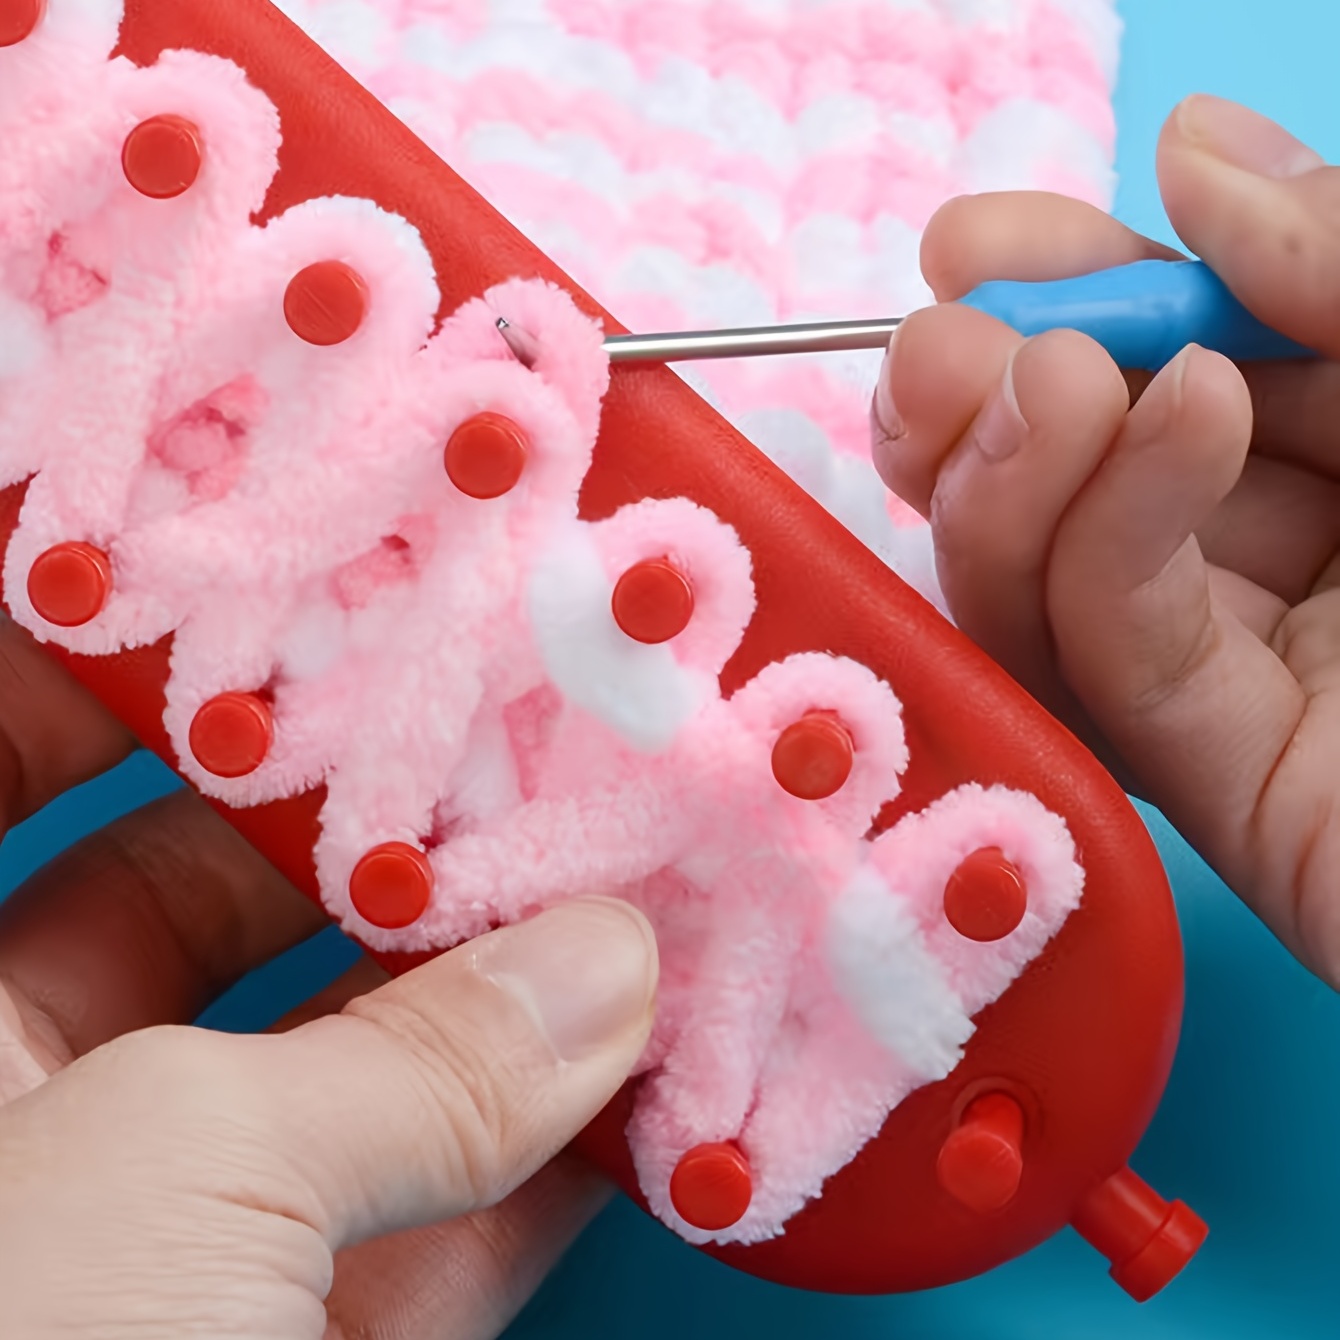  MYCENSE Scarf Loom Knitting Tool with Crochet Hook Crocheting  DIY Craft Durable Rectangular Knitting Loom Scarf Knitter for Scarf Shawl  Hat Sweater, 58cm : Arts, Crafts & Sewing